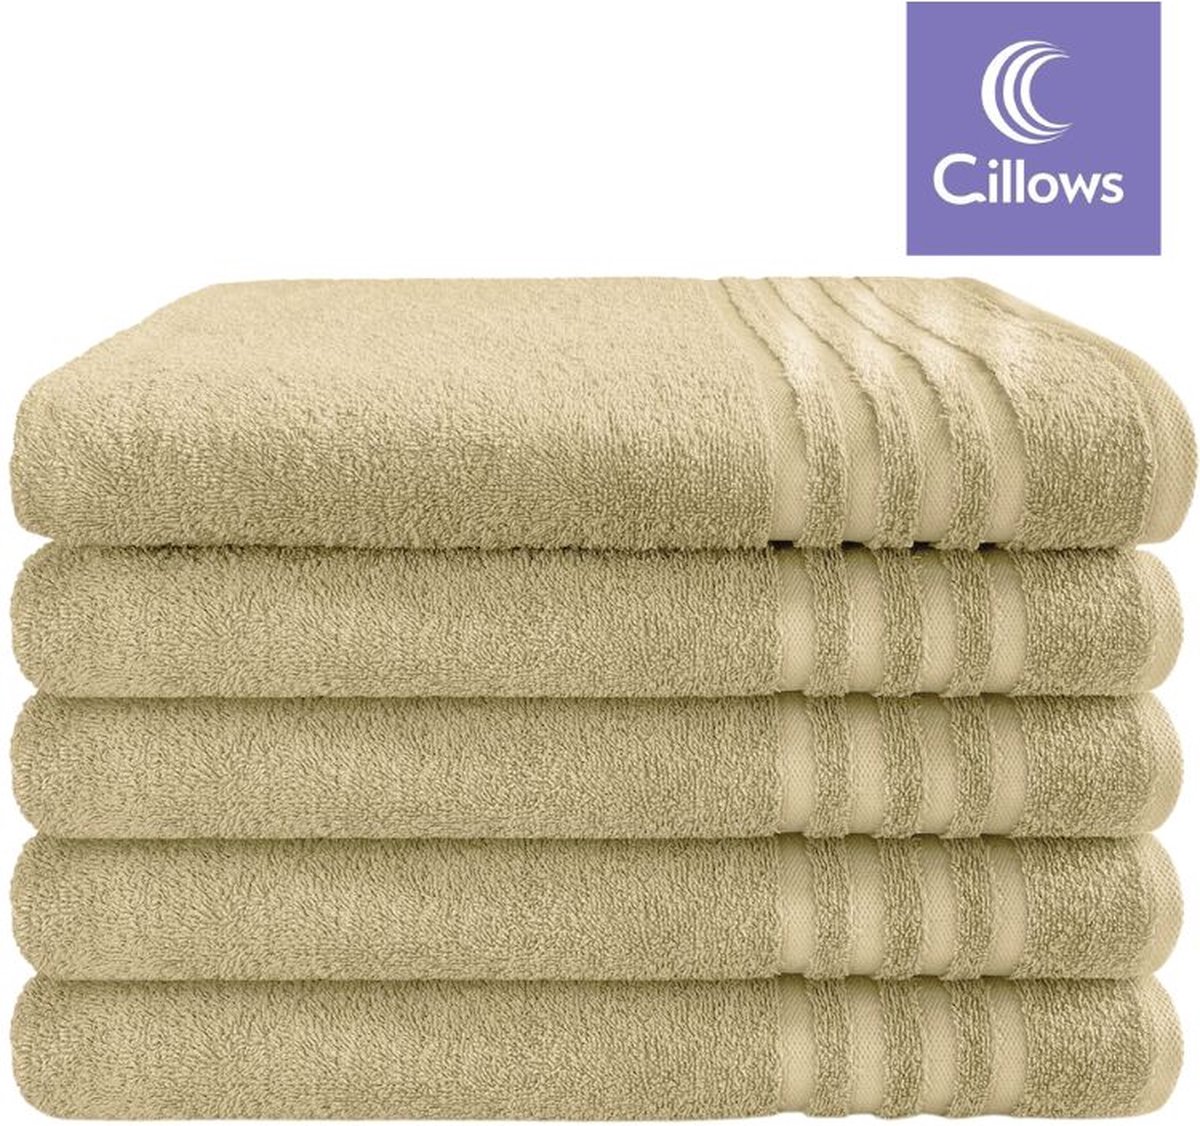 Cillows Handdoek - Hoogwaardige hotelkwaliteit - 50x100 cm - 5 stuks - Taupe